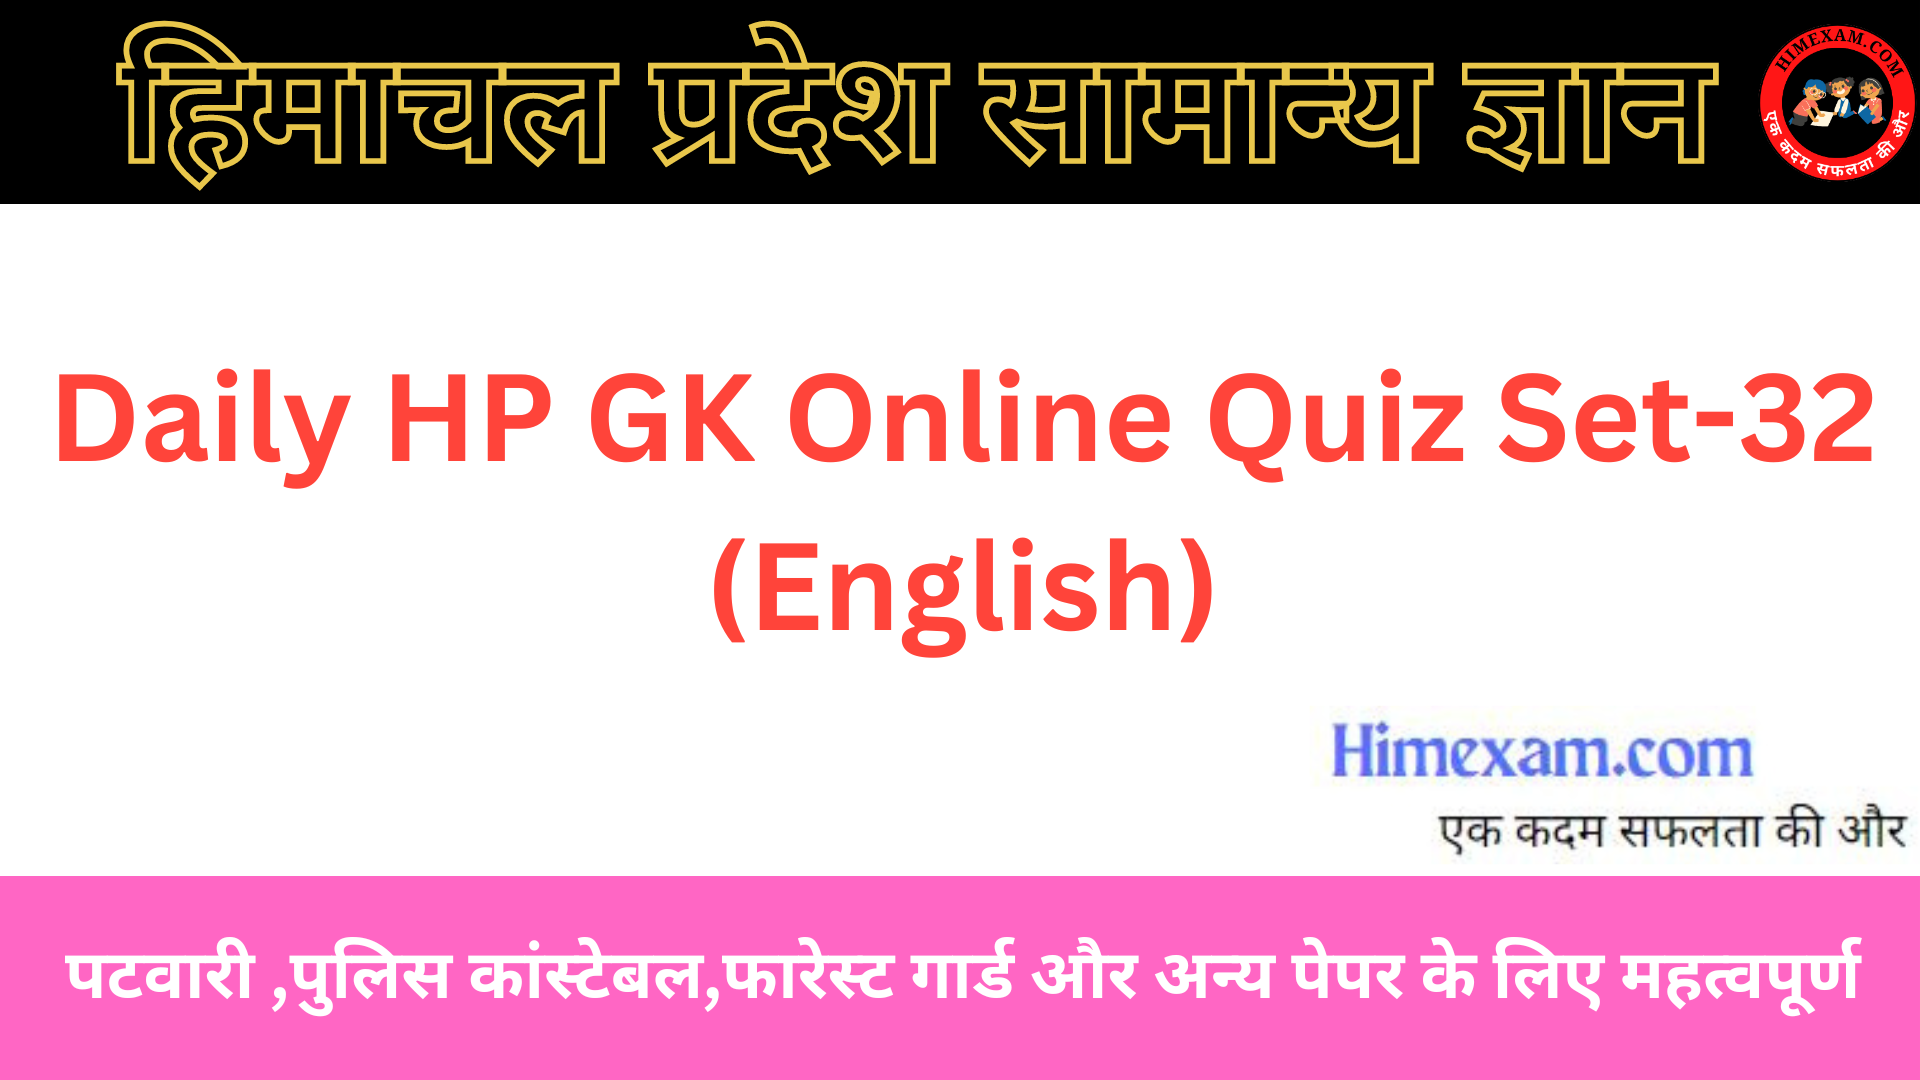 Daily HP GK Online Quiz Set-32 (English)